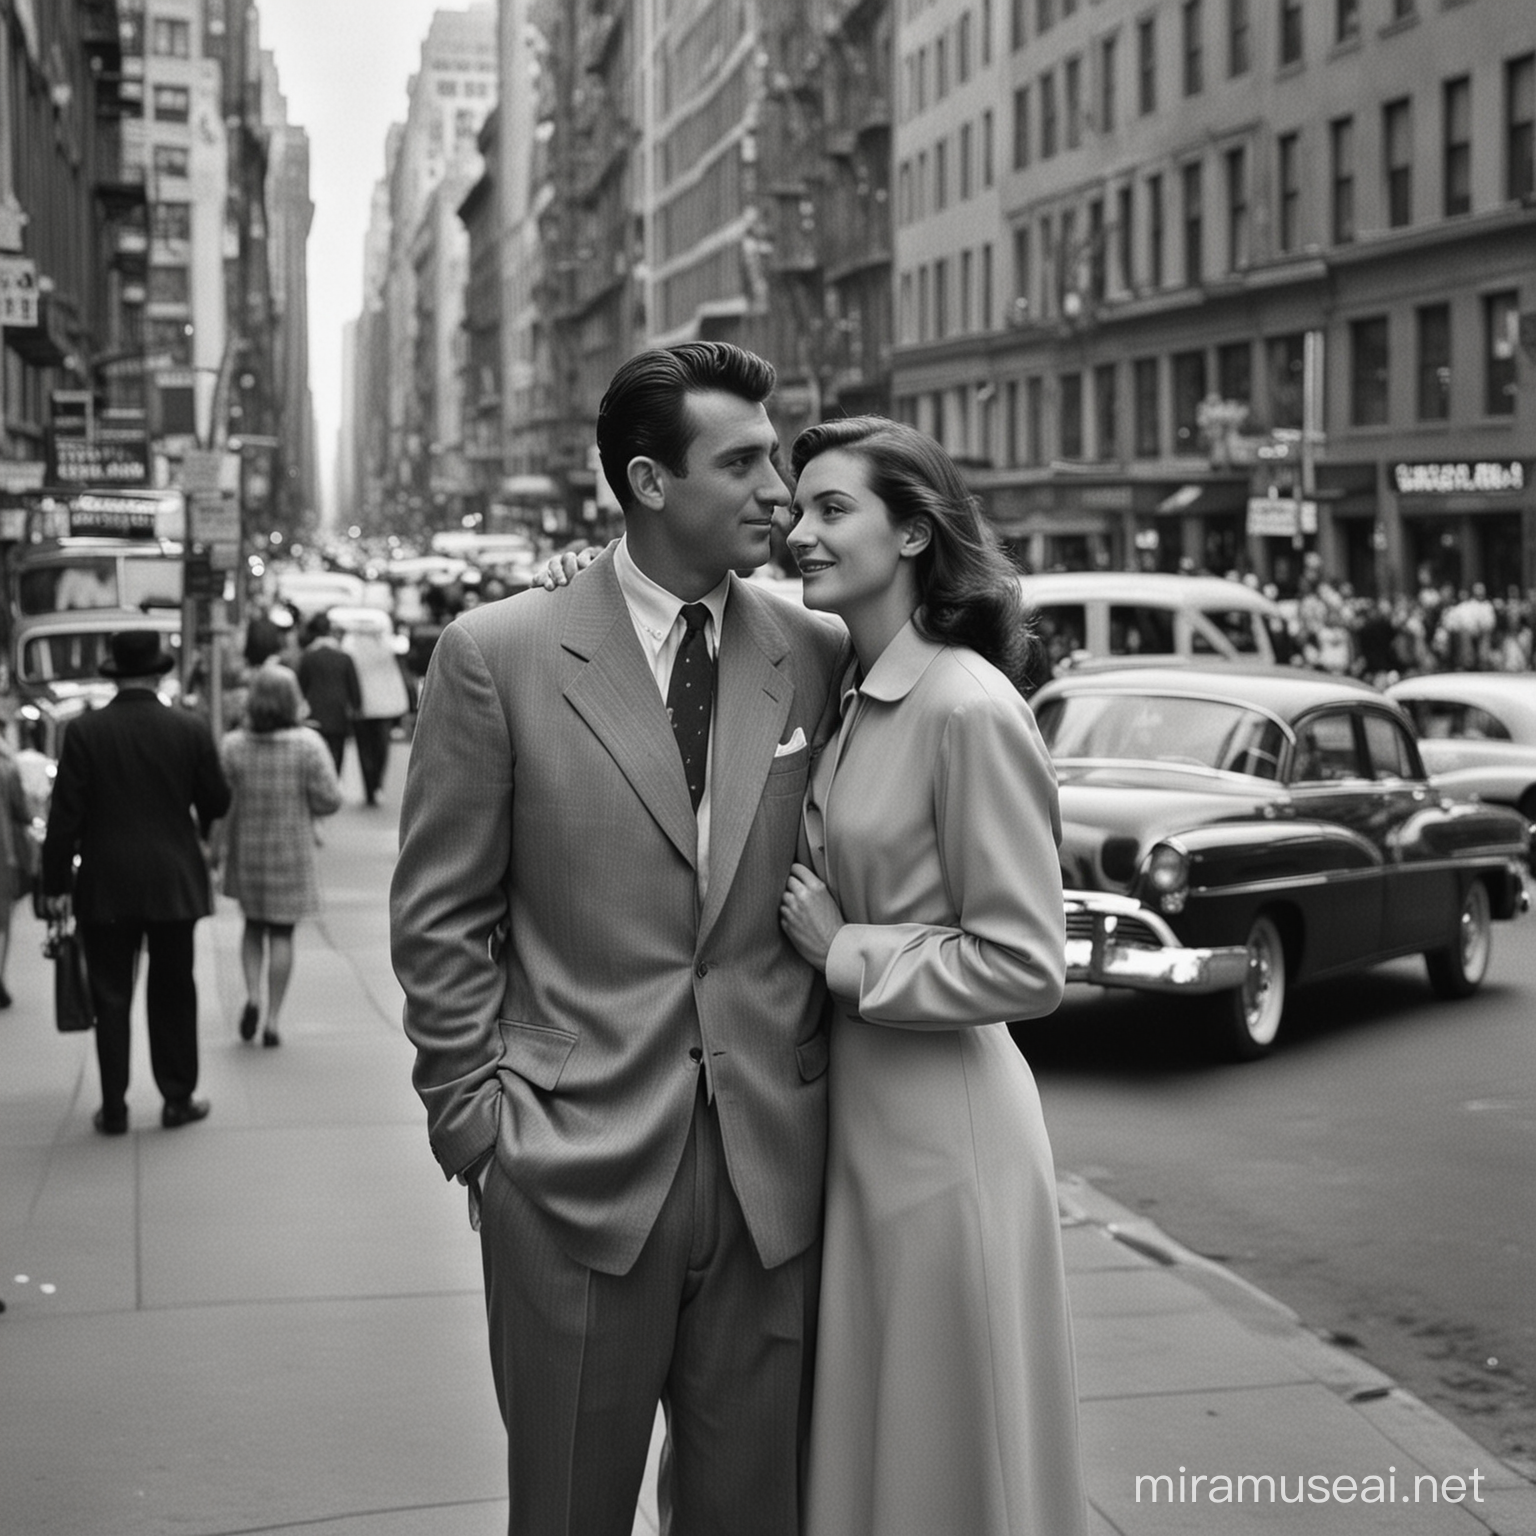 Romantic Couple Strolling Through Urban Landscape Captured by Ansel Adams